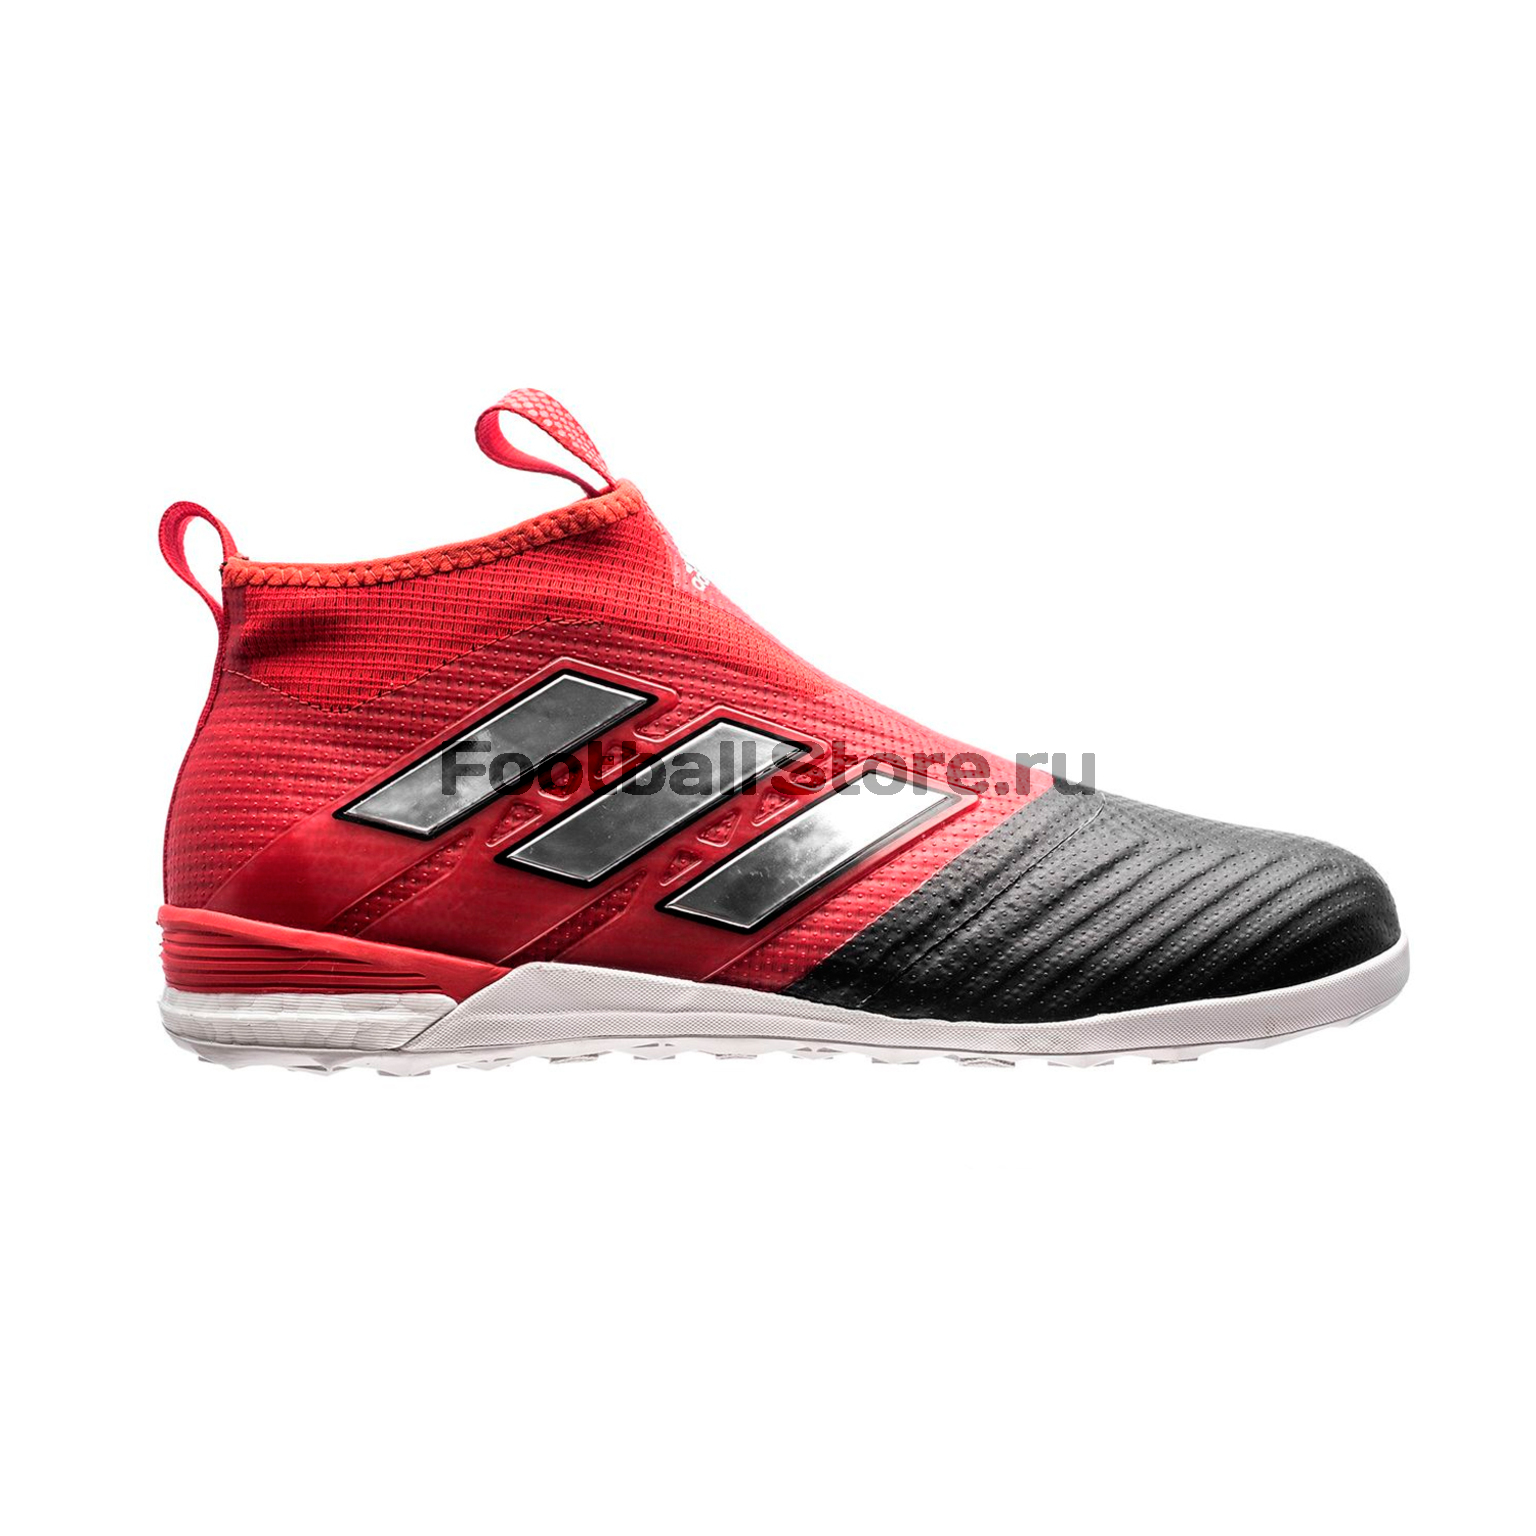 Шиповки Adidas ACE Tango 17+ Purecontrol Turf Shoes S82078 